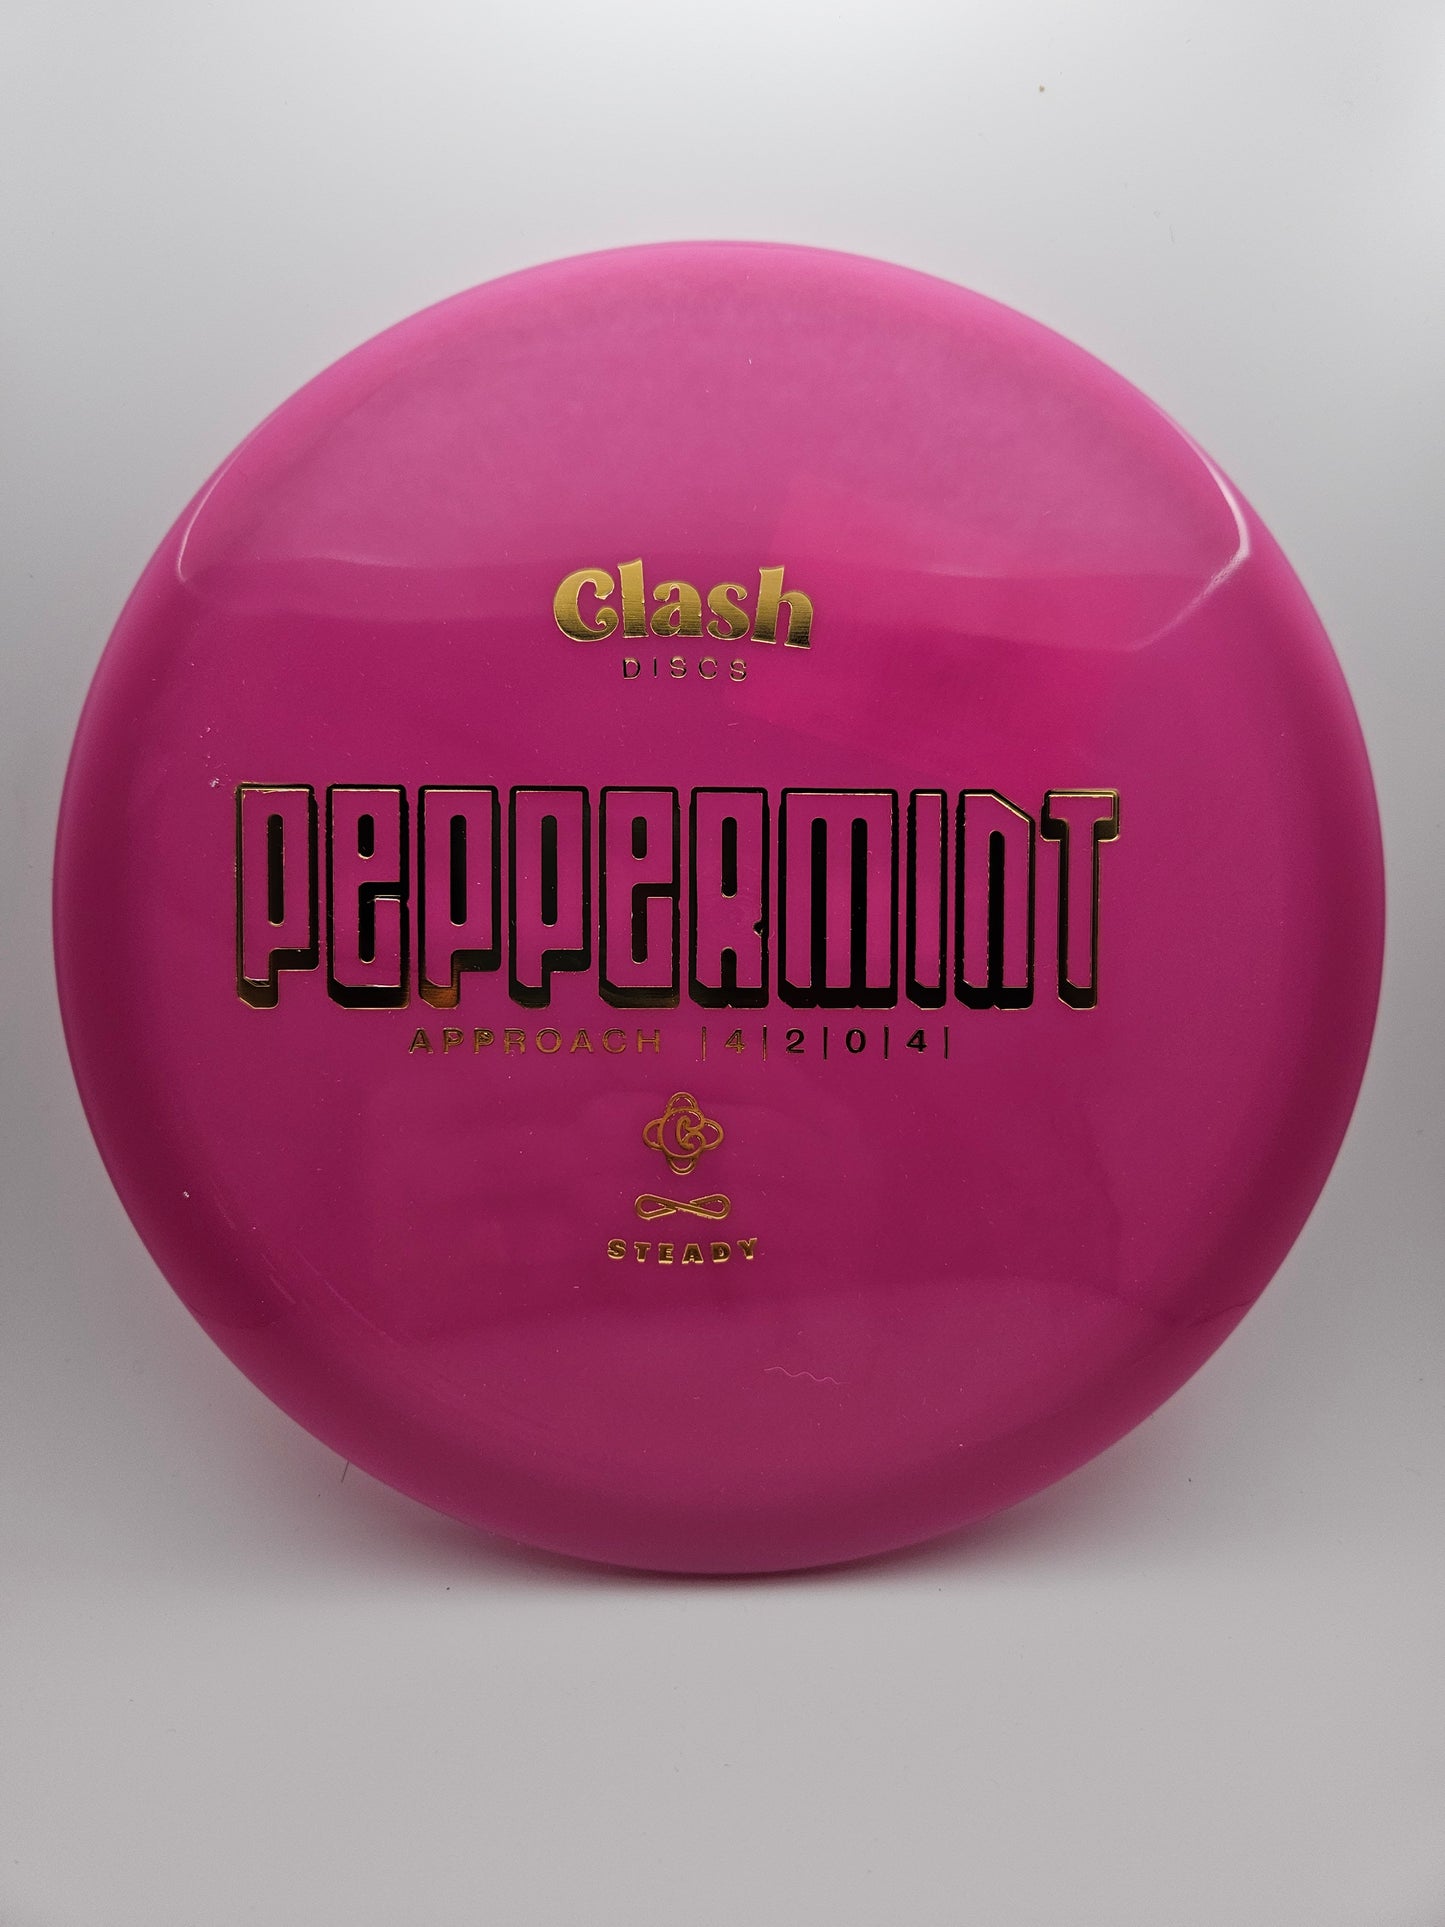 Steady Peppermint